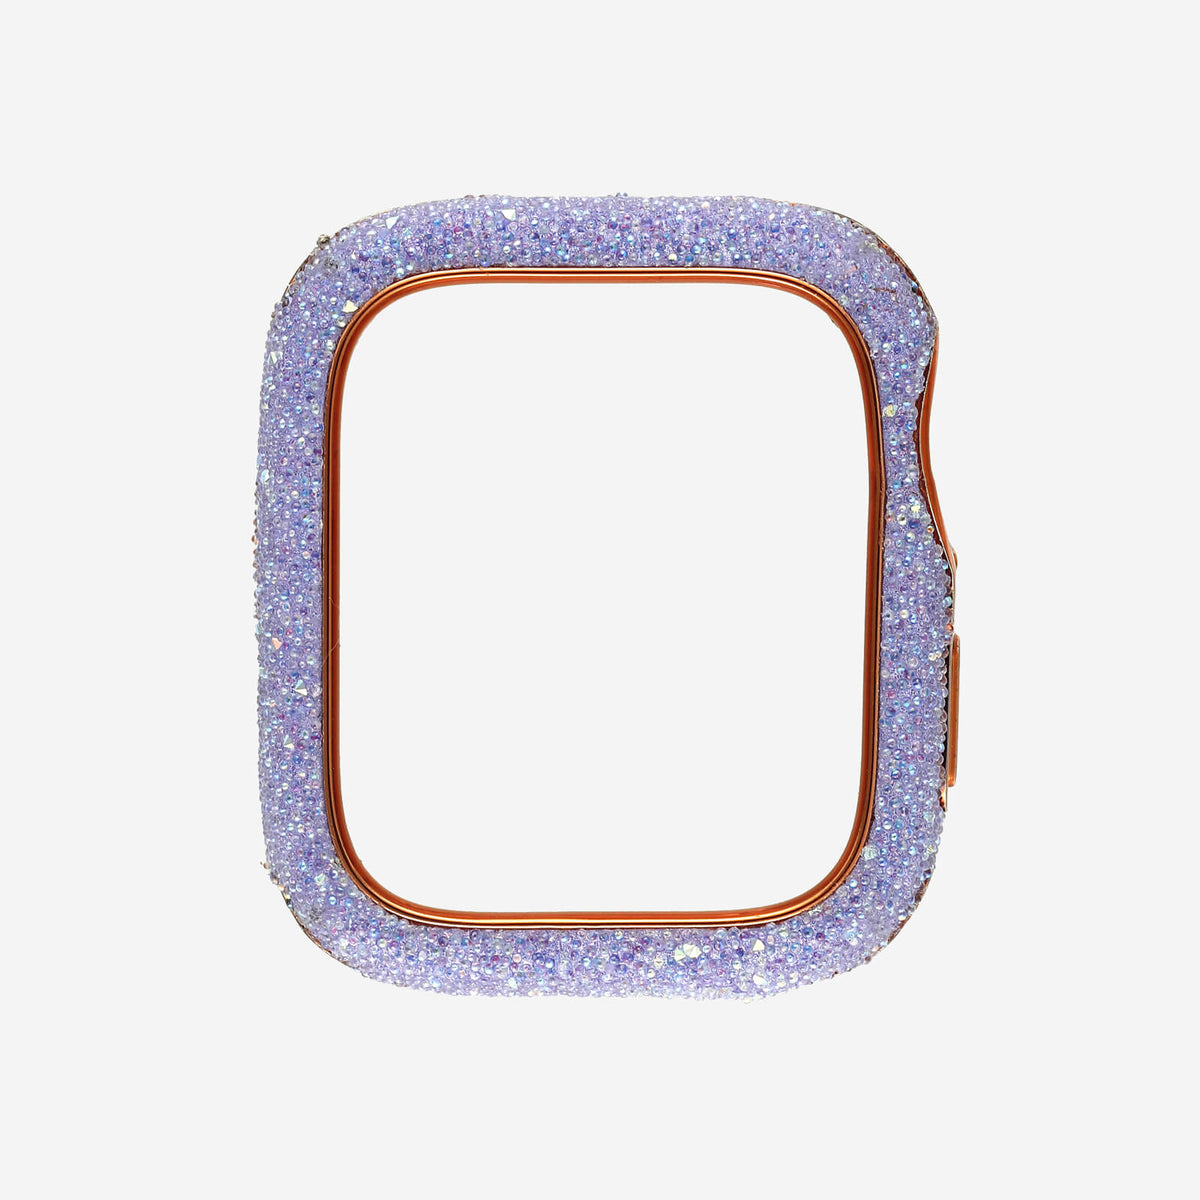 Apple Watch Glitter Bumper Case - Lavender